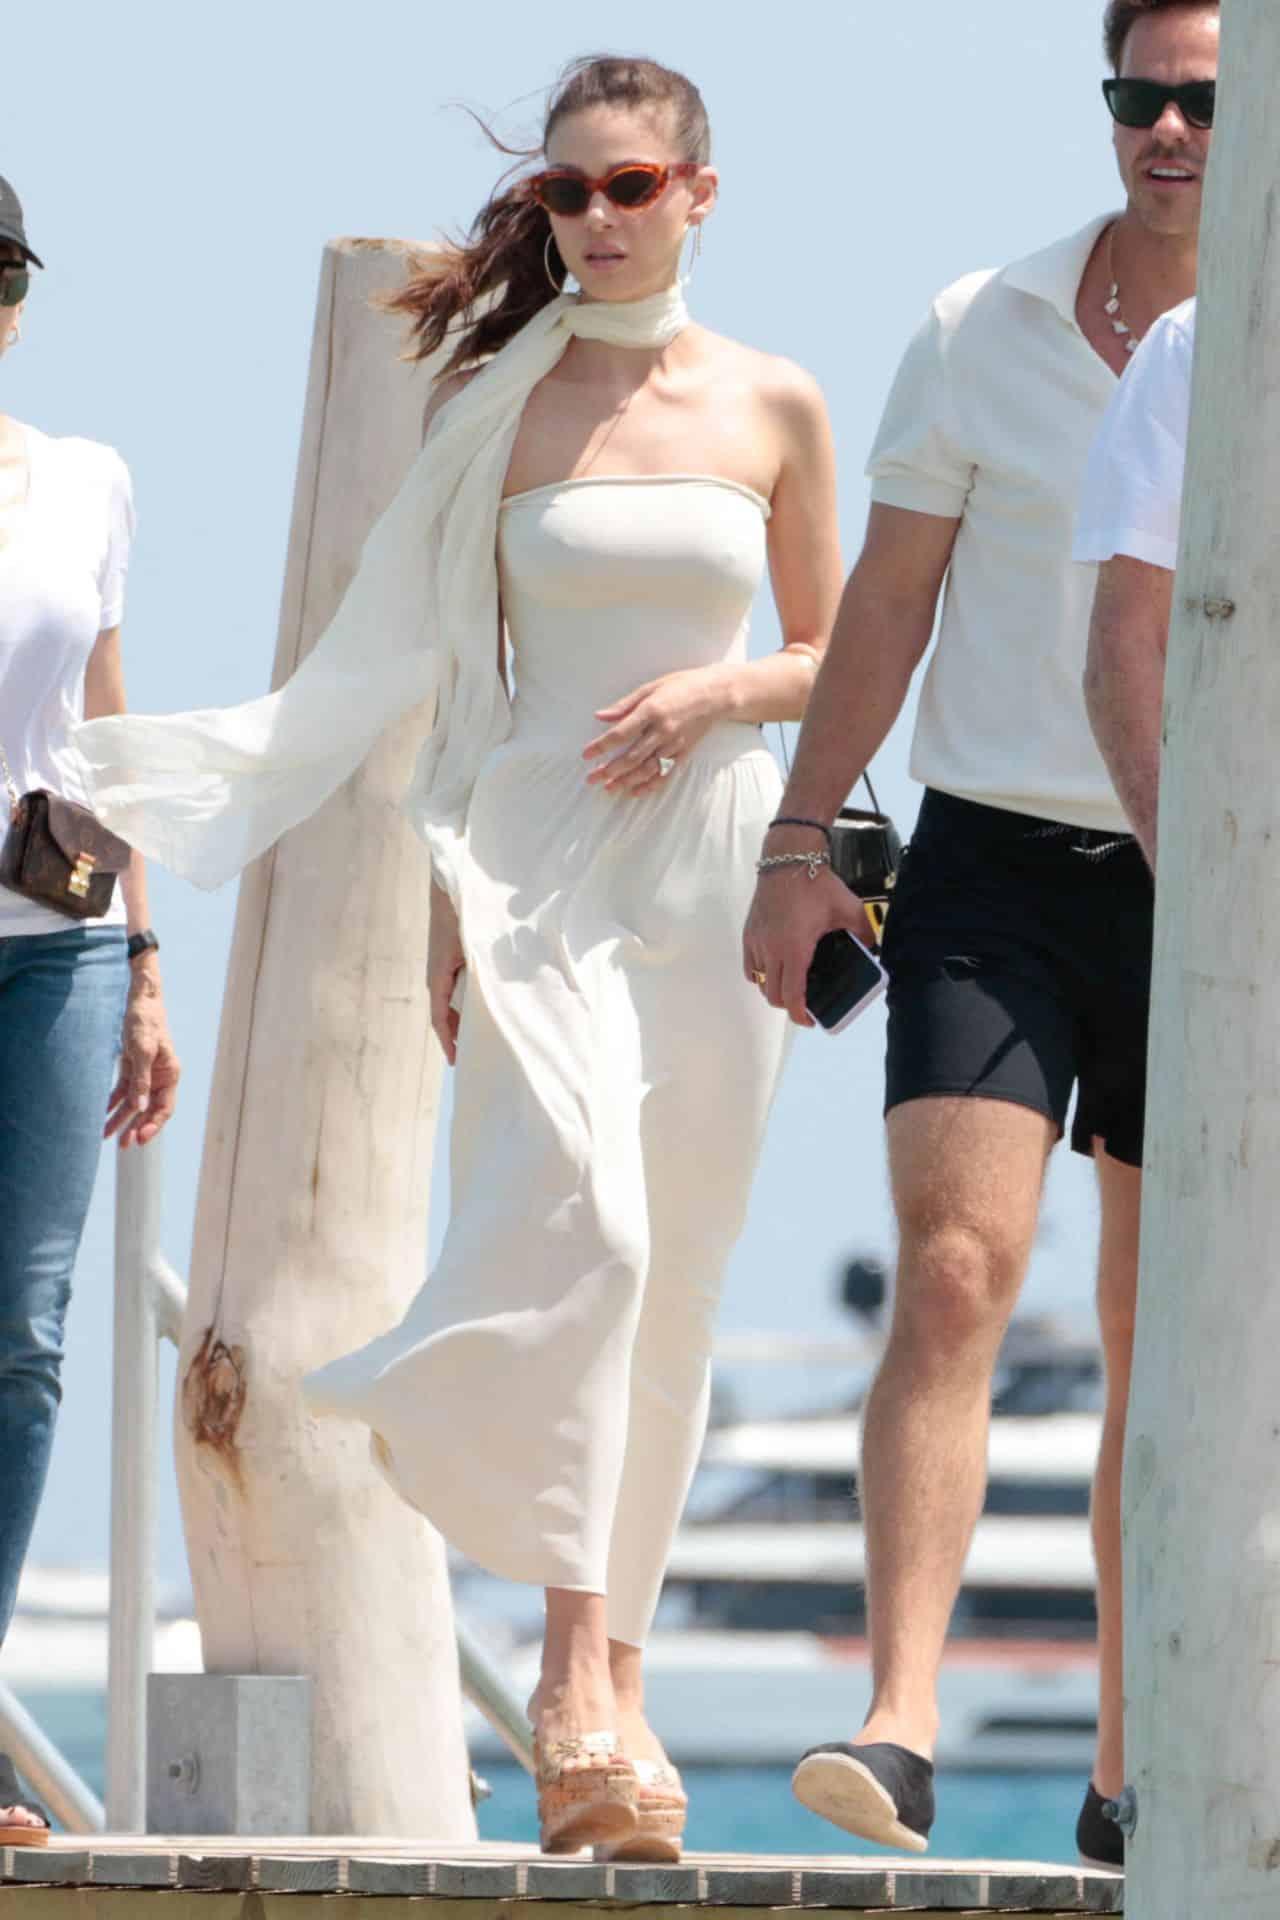 Nicola Peltz Looks Sensational in White Strapless Dress at Club 55